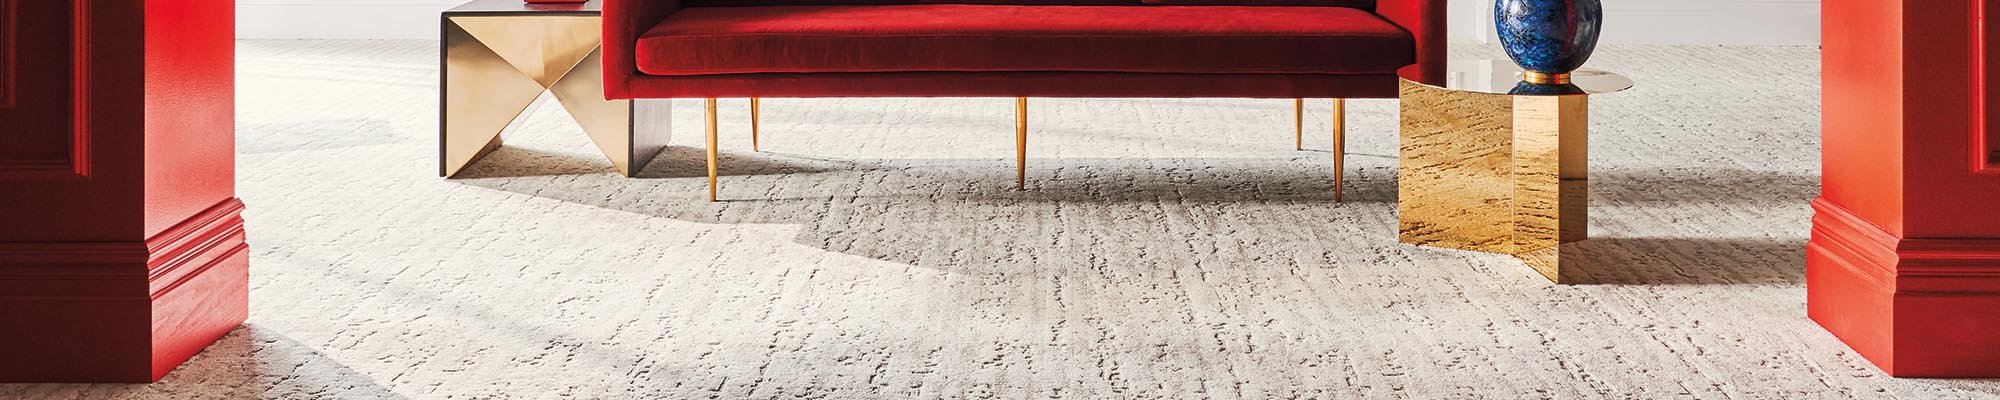 Inspiration gallery - CarpetsPlus COLORTILE of Bozeman in Bozeman, MT